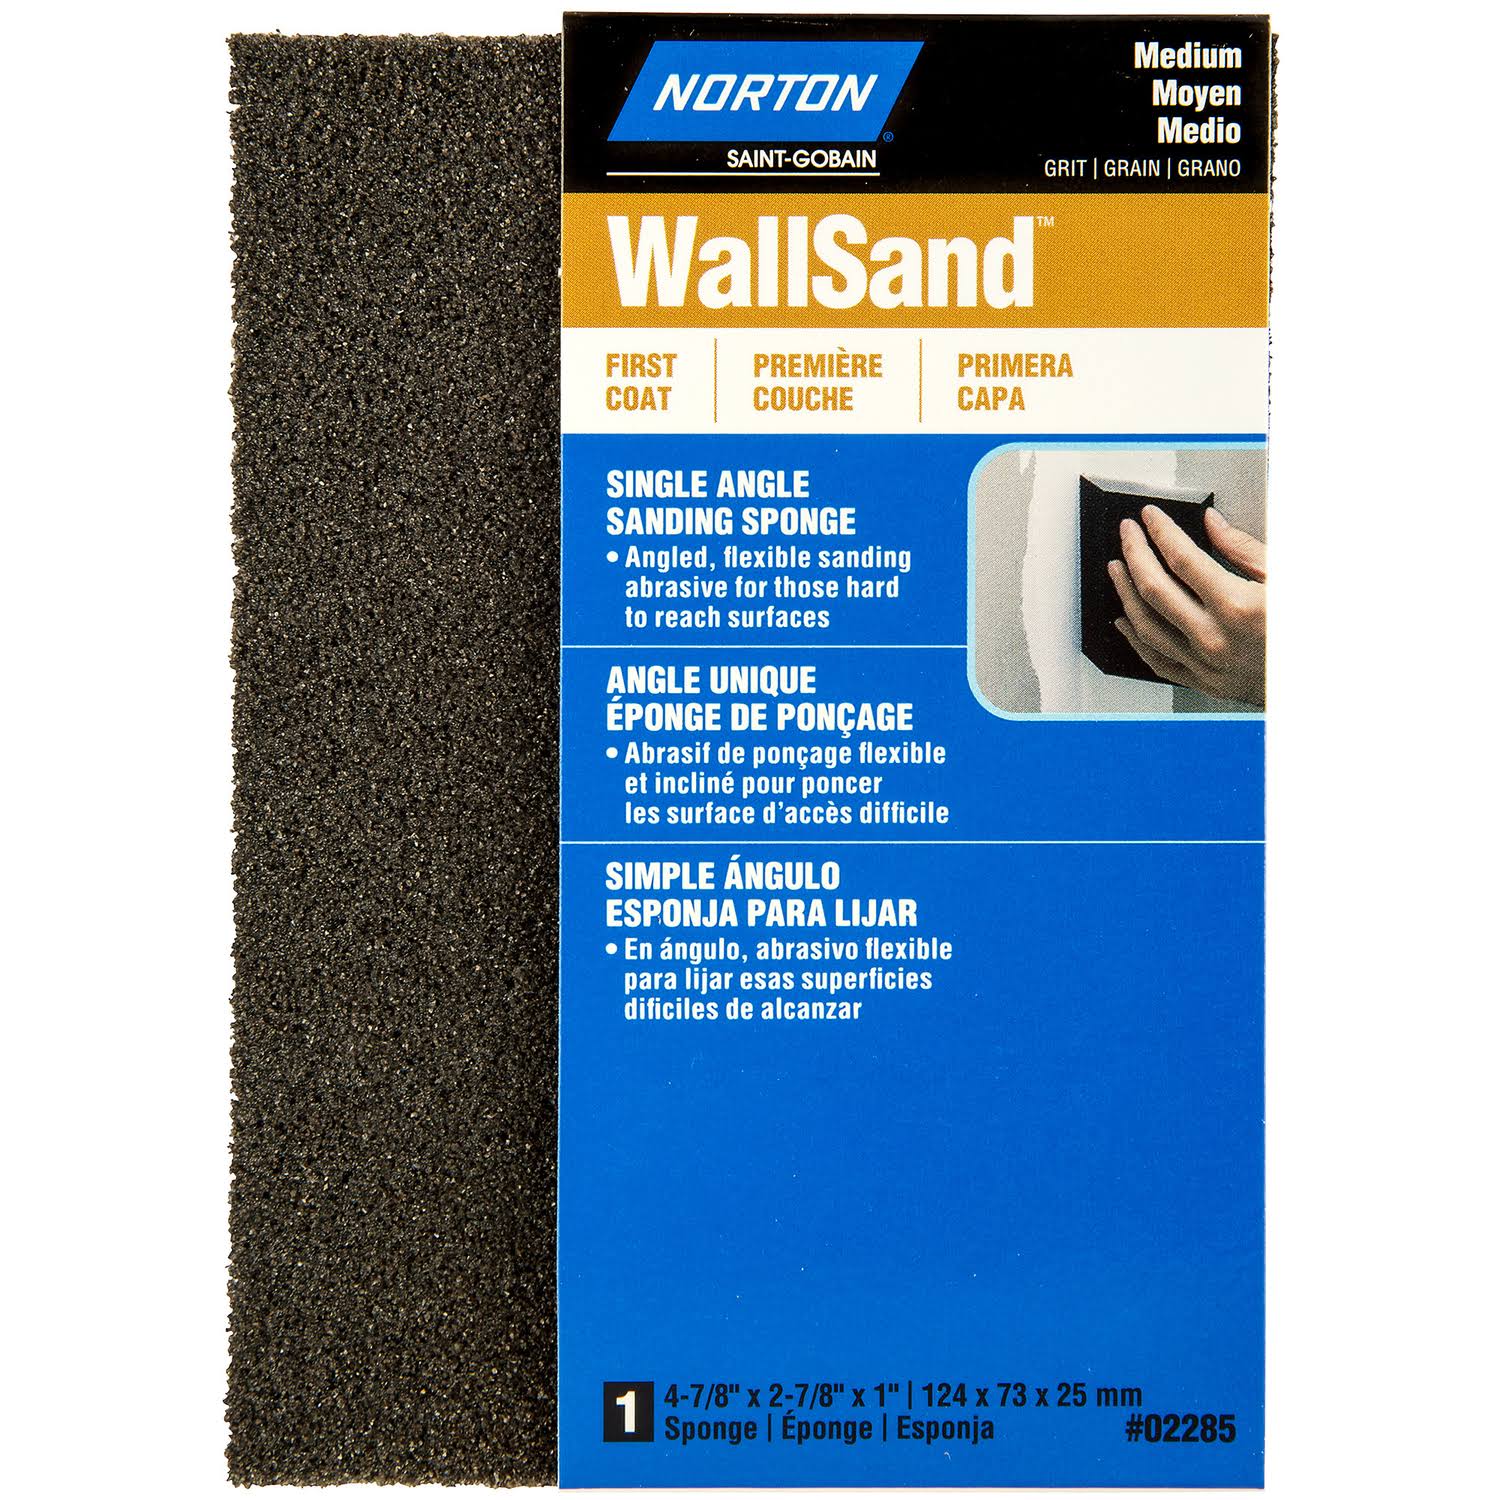 Norton Wallsand Sanding Sponge - Medium Grit